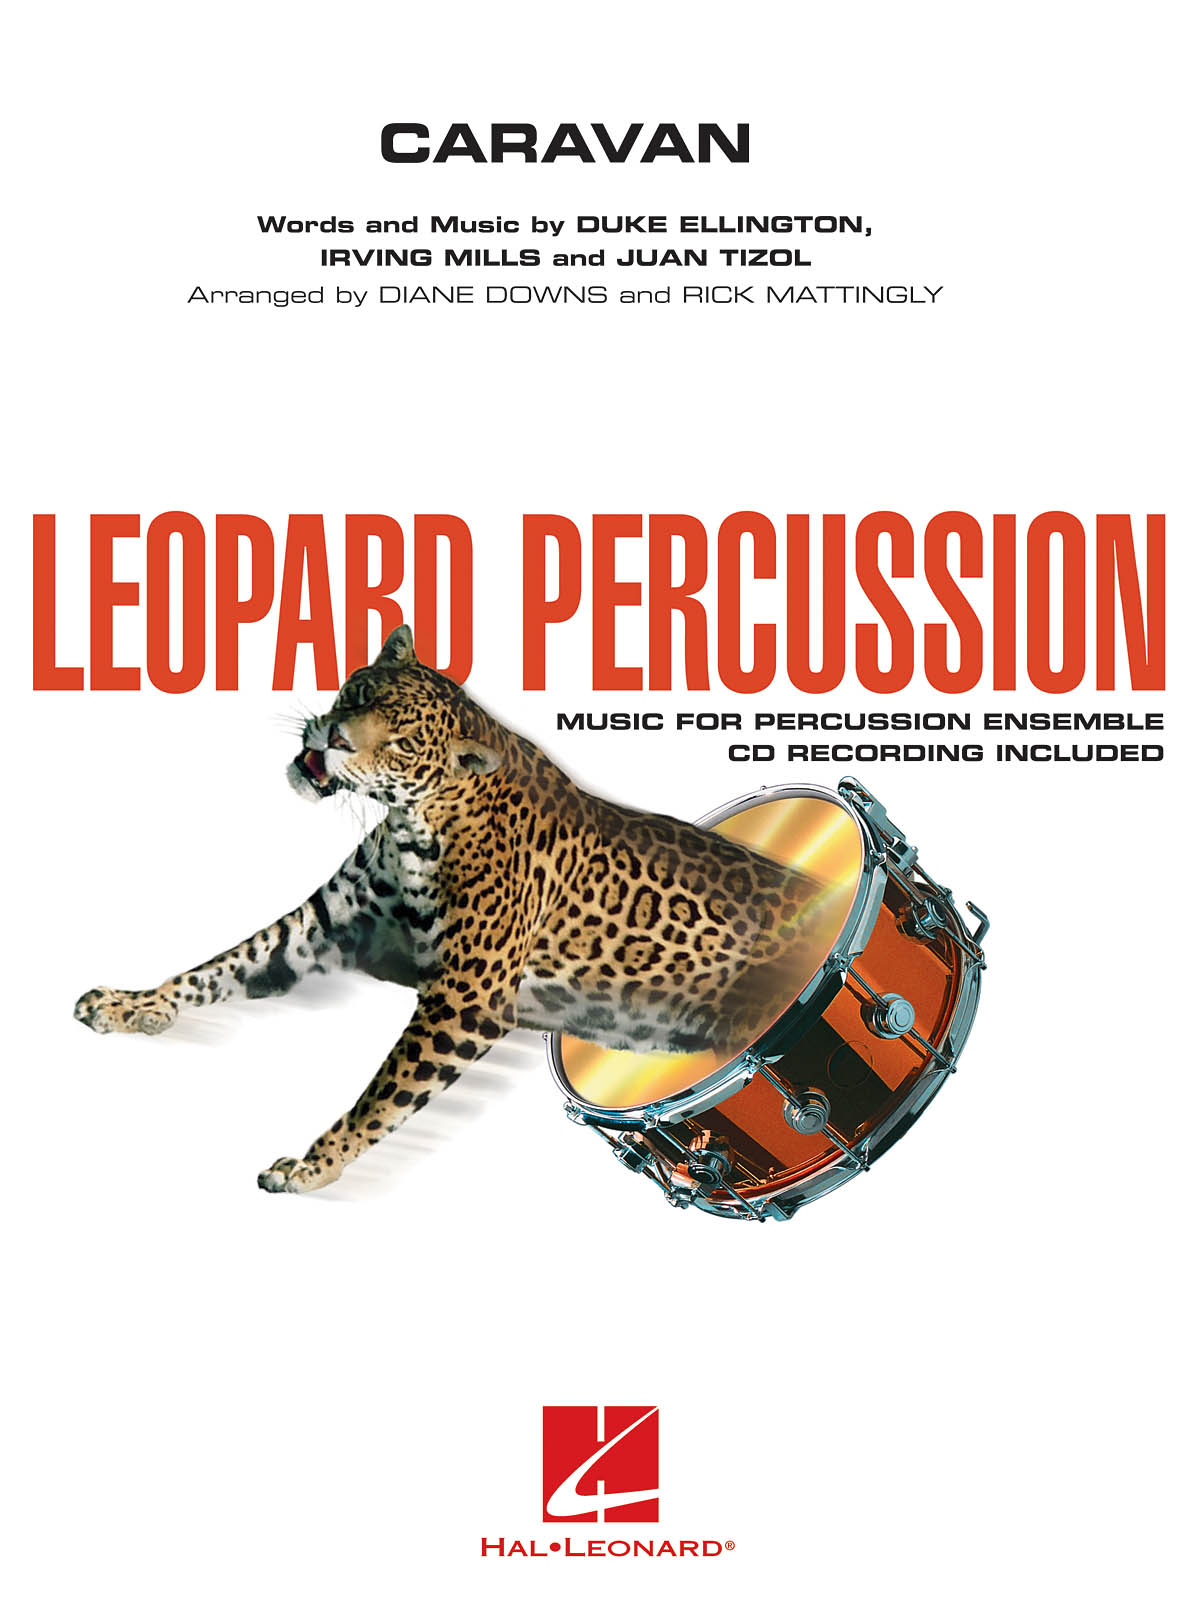 Duke Ellington Irving Mills Juan Tizol: Caravan - Leopard Percussion: Percussion